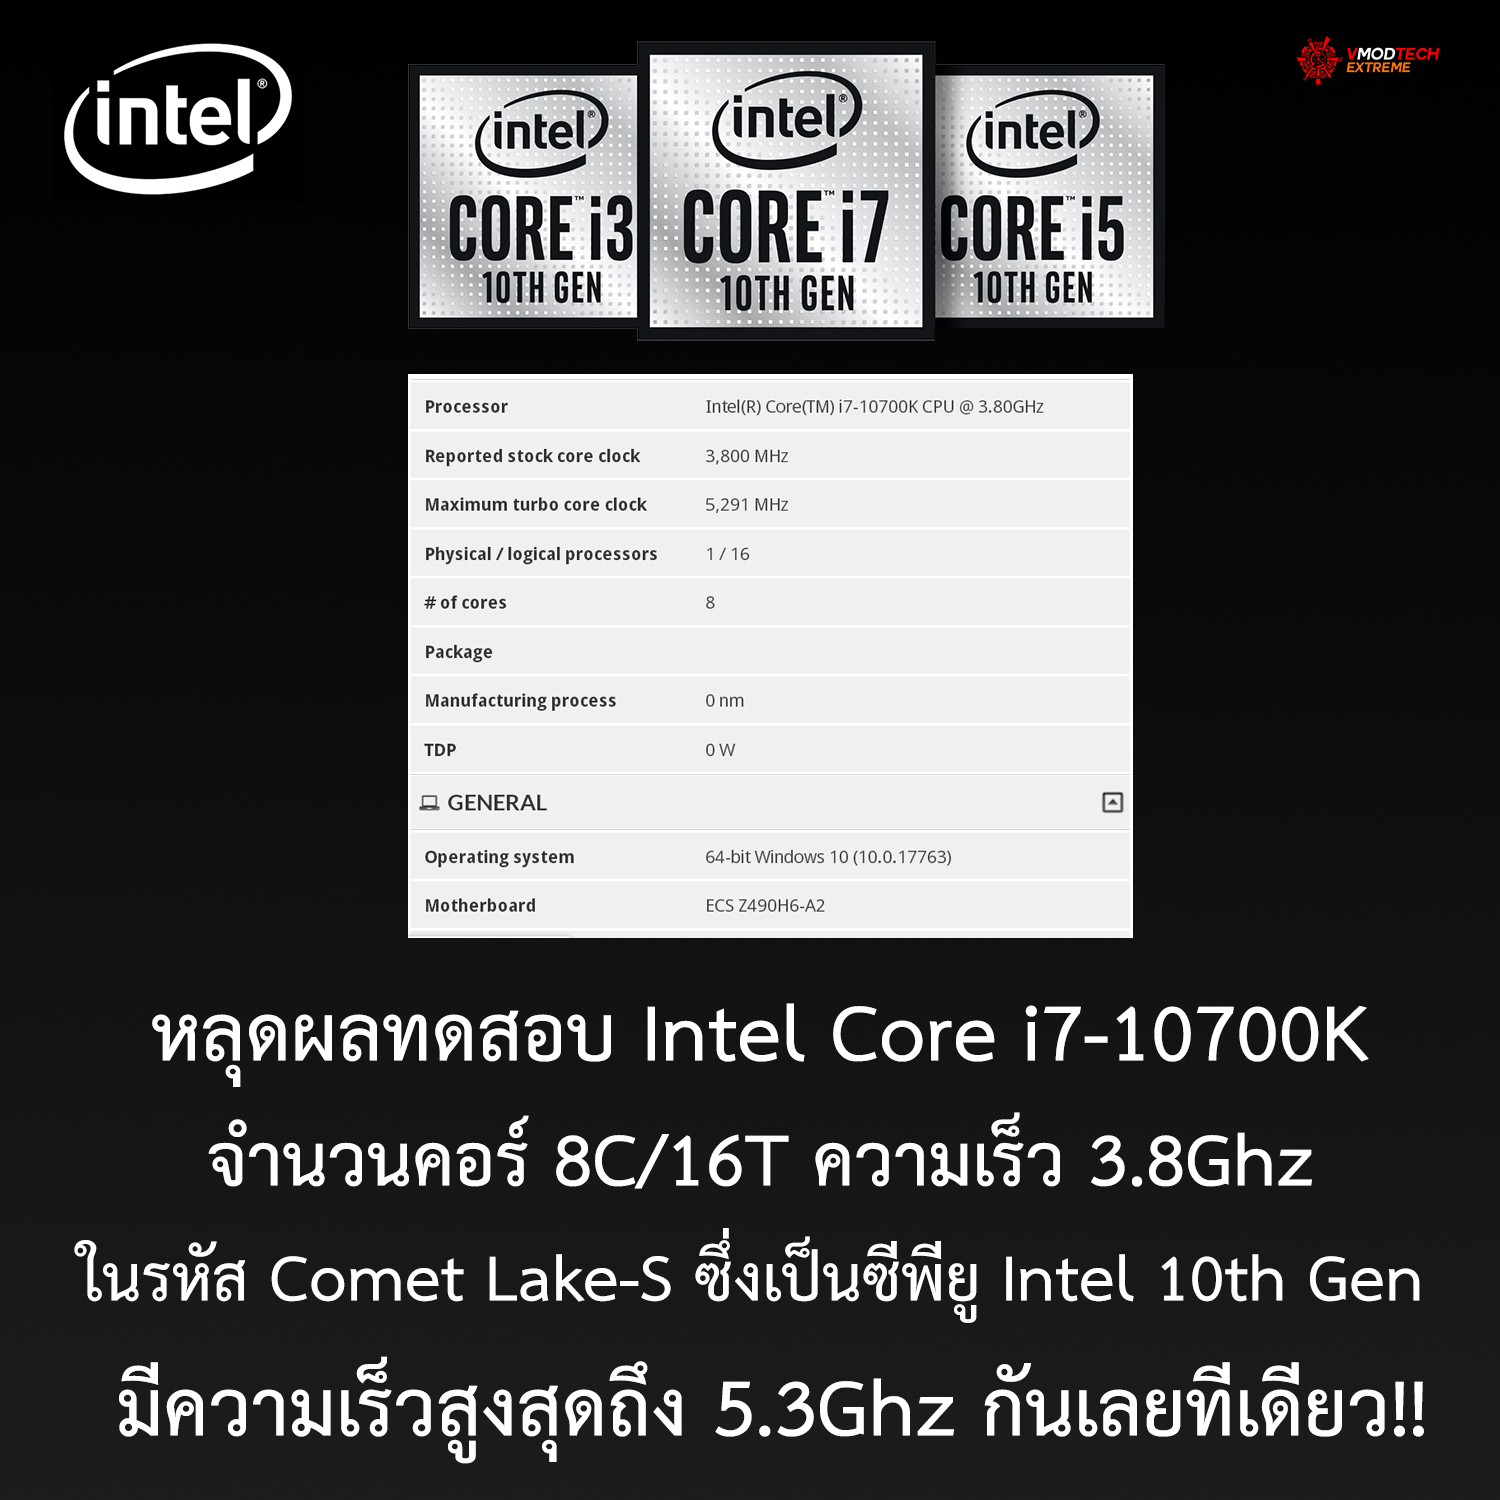 intel core i7 10700k 53ghz1 หลุดผลทดสอบ Intel Core i7 10700K อย่างไม่เป็นทางการ มีจำนวนคอร์ 8C/16T ความเร็วสูงสุดถึง 5.3Ghz กันเลยทีเดียว!!